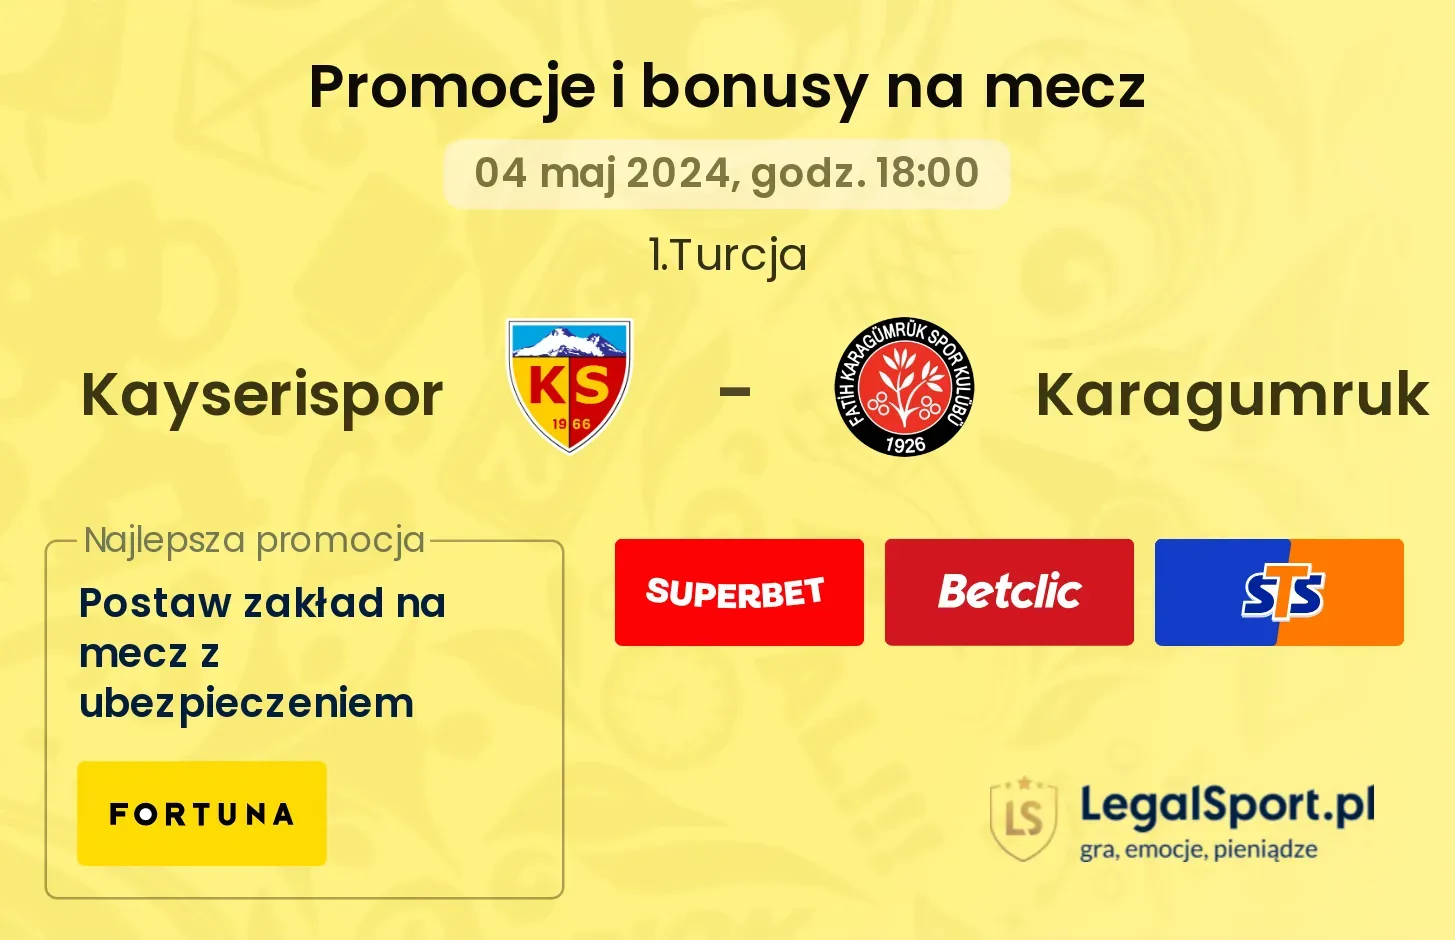 Kayserispor - Karagumruk promocje bonusy na mecz